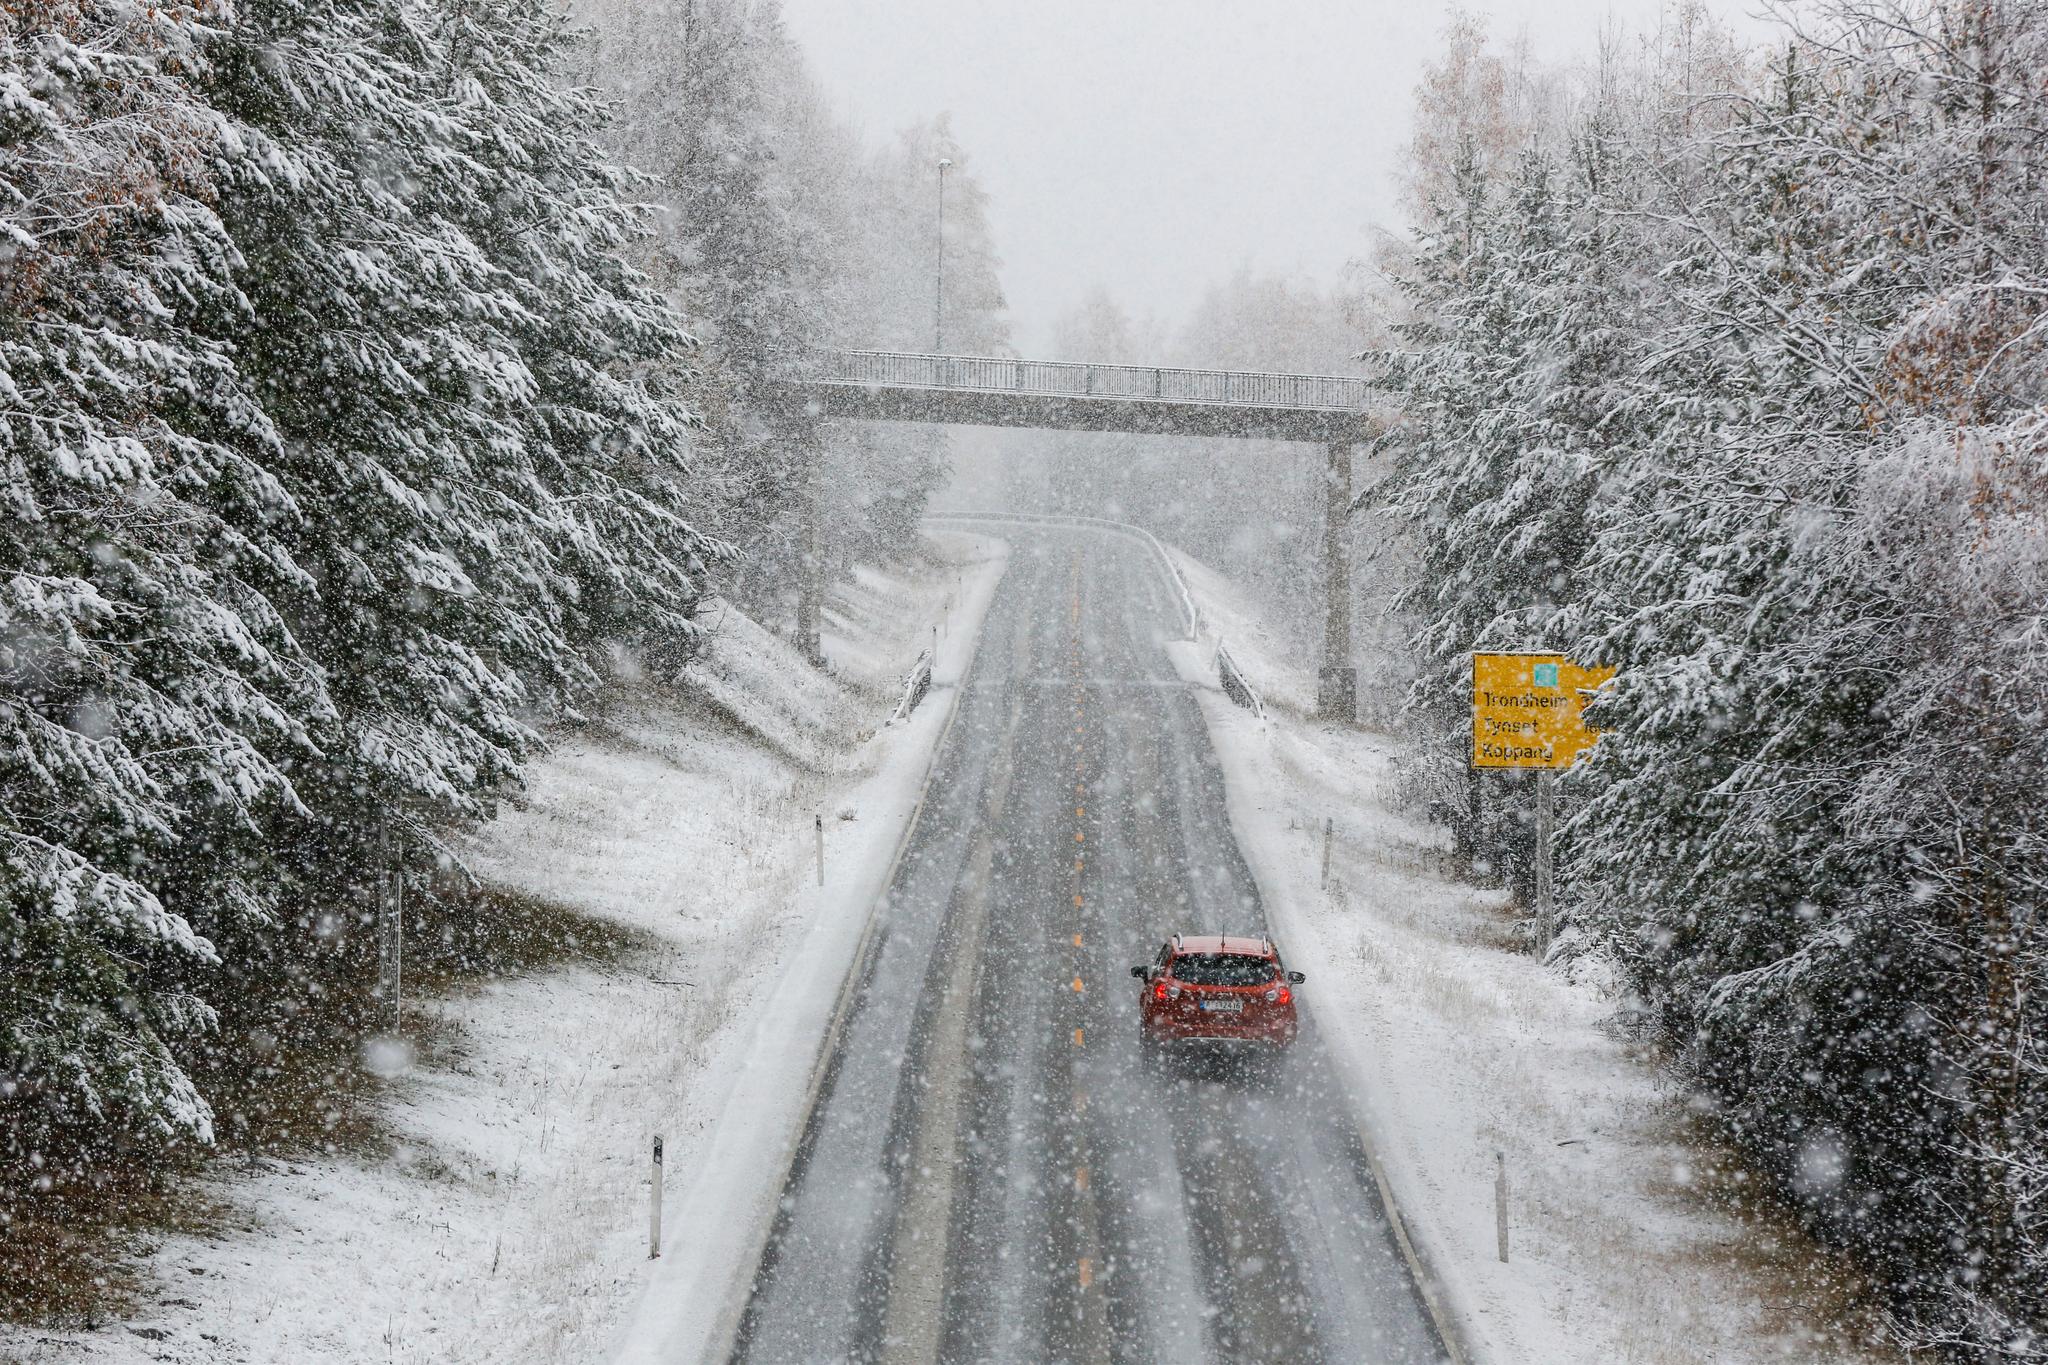 Snø og slapseføret på riksvei 3 i Østerdalen ved Rena. Vinteren har kommet på innlandet i Sør-Norge 